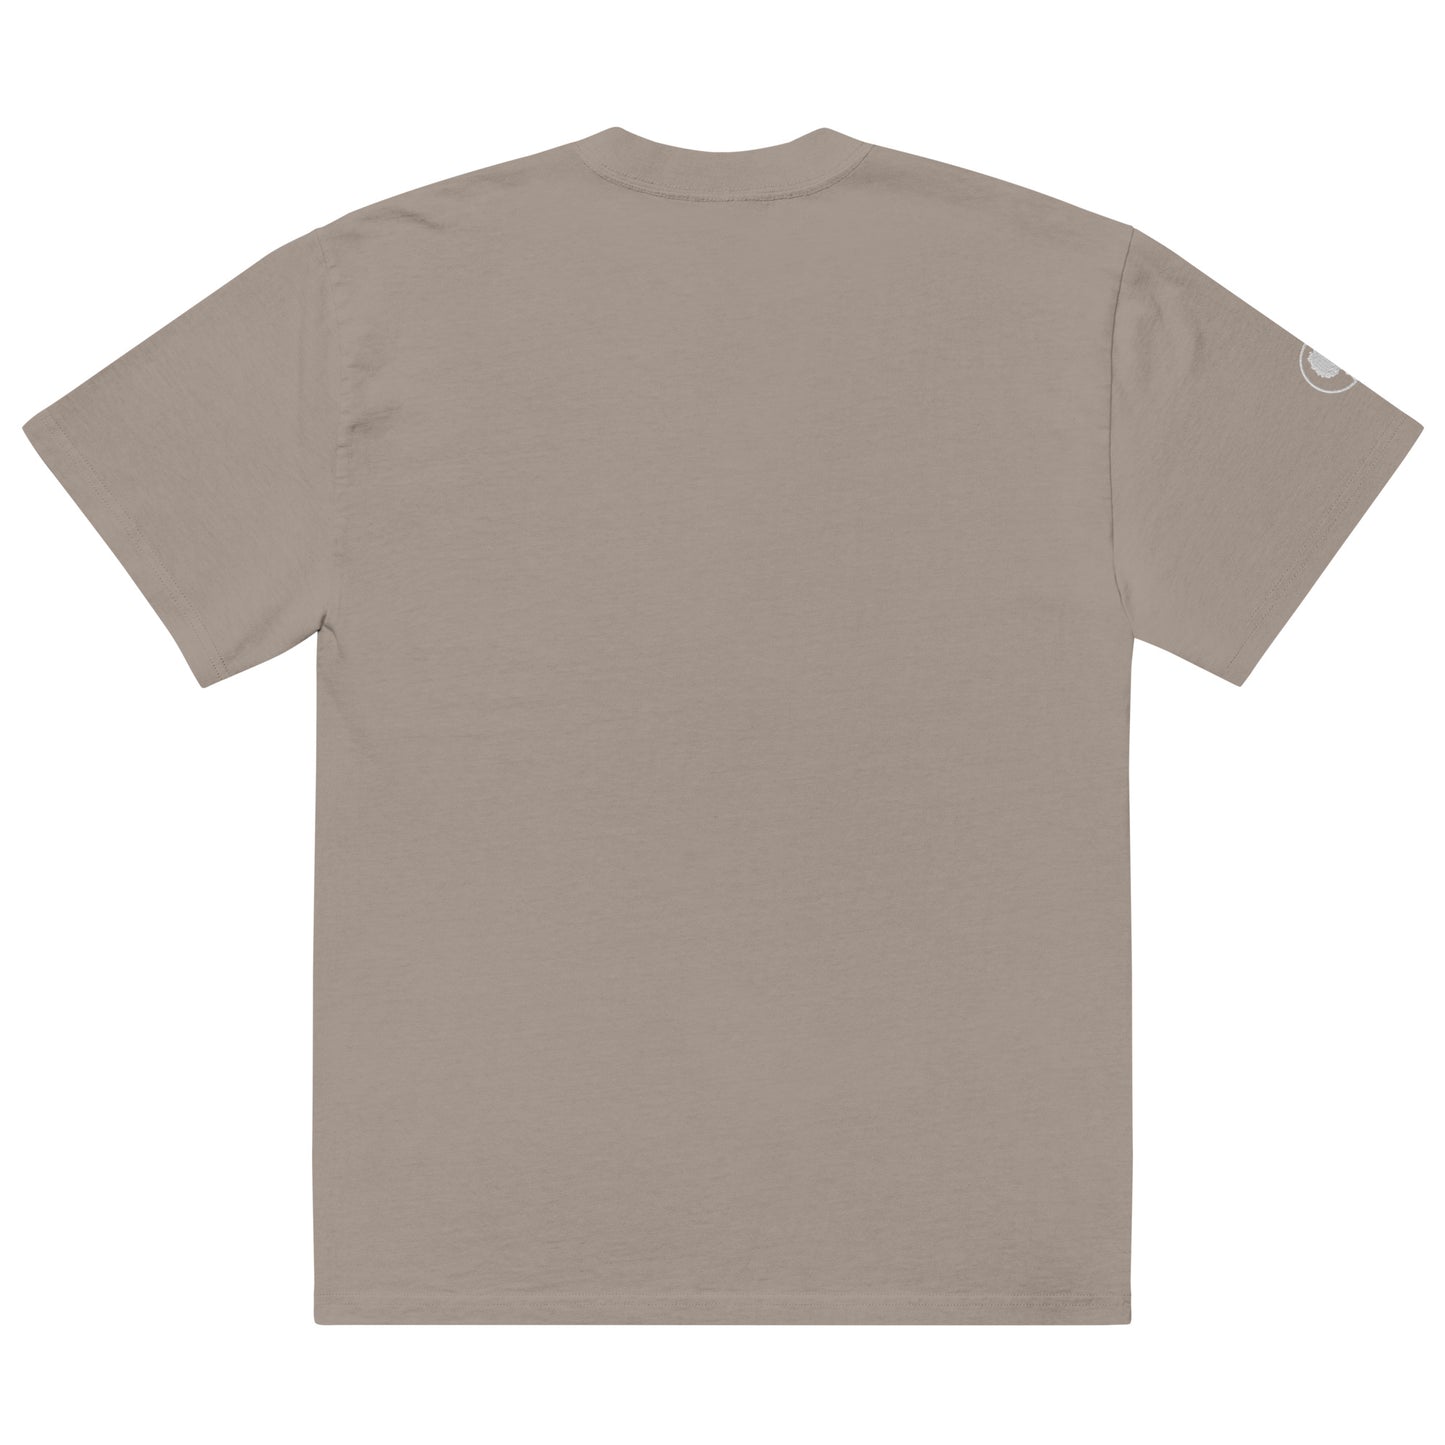 Kyle Skye Oversized Faded T-Shirt